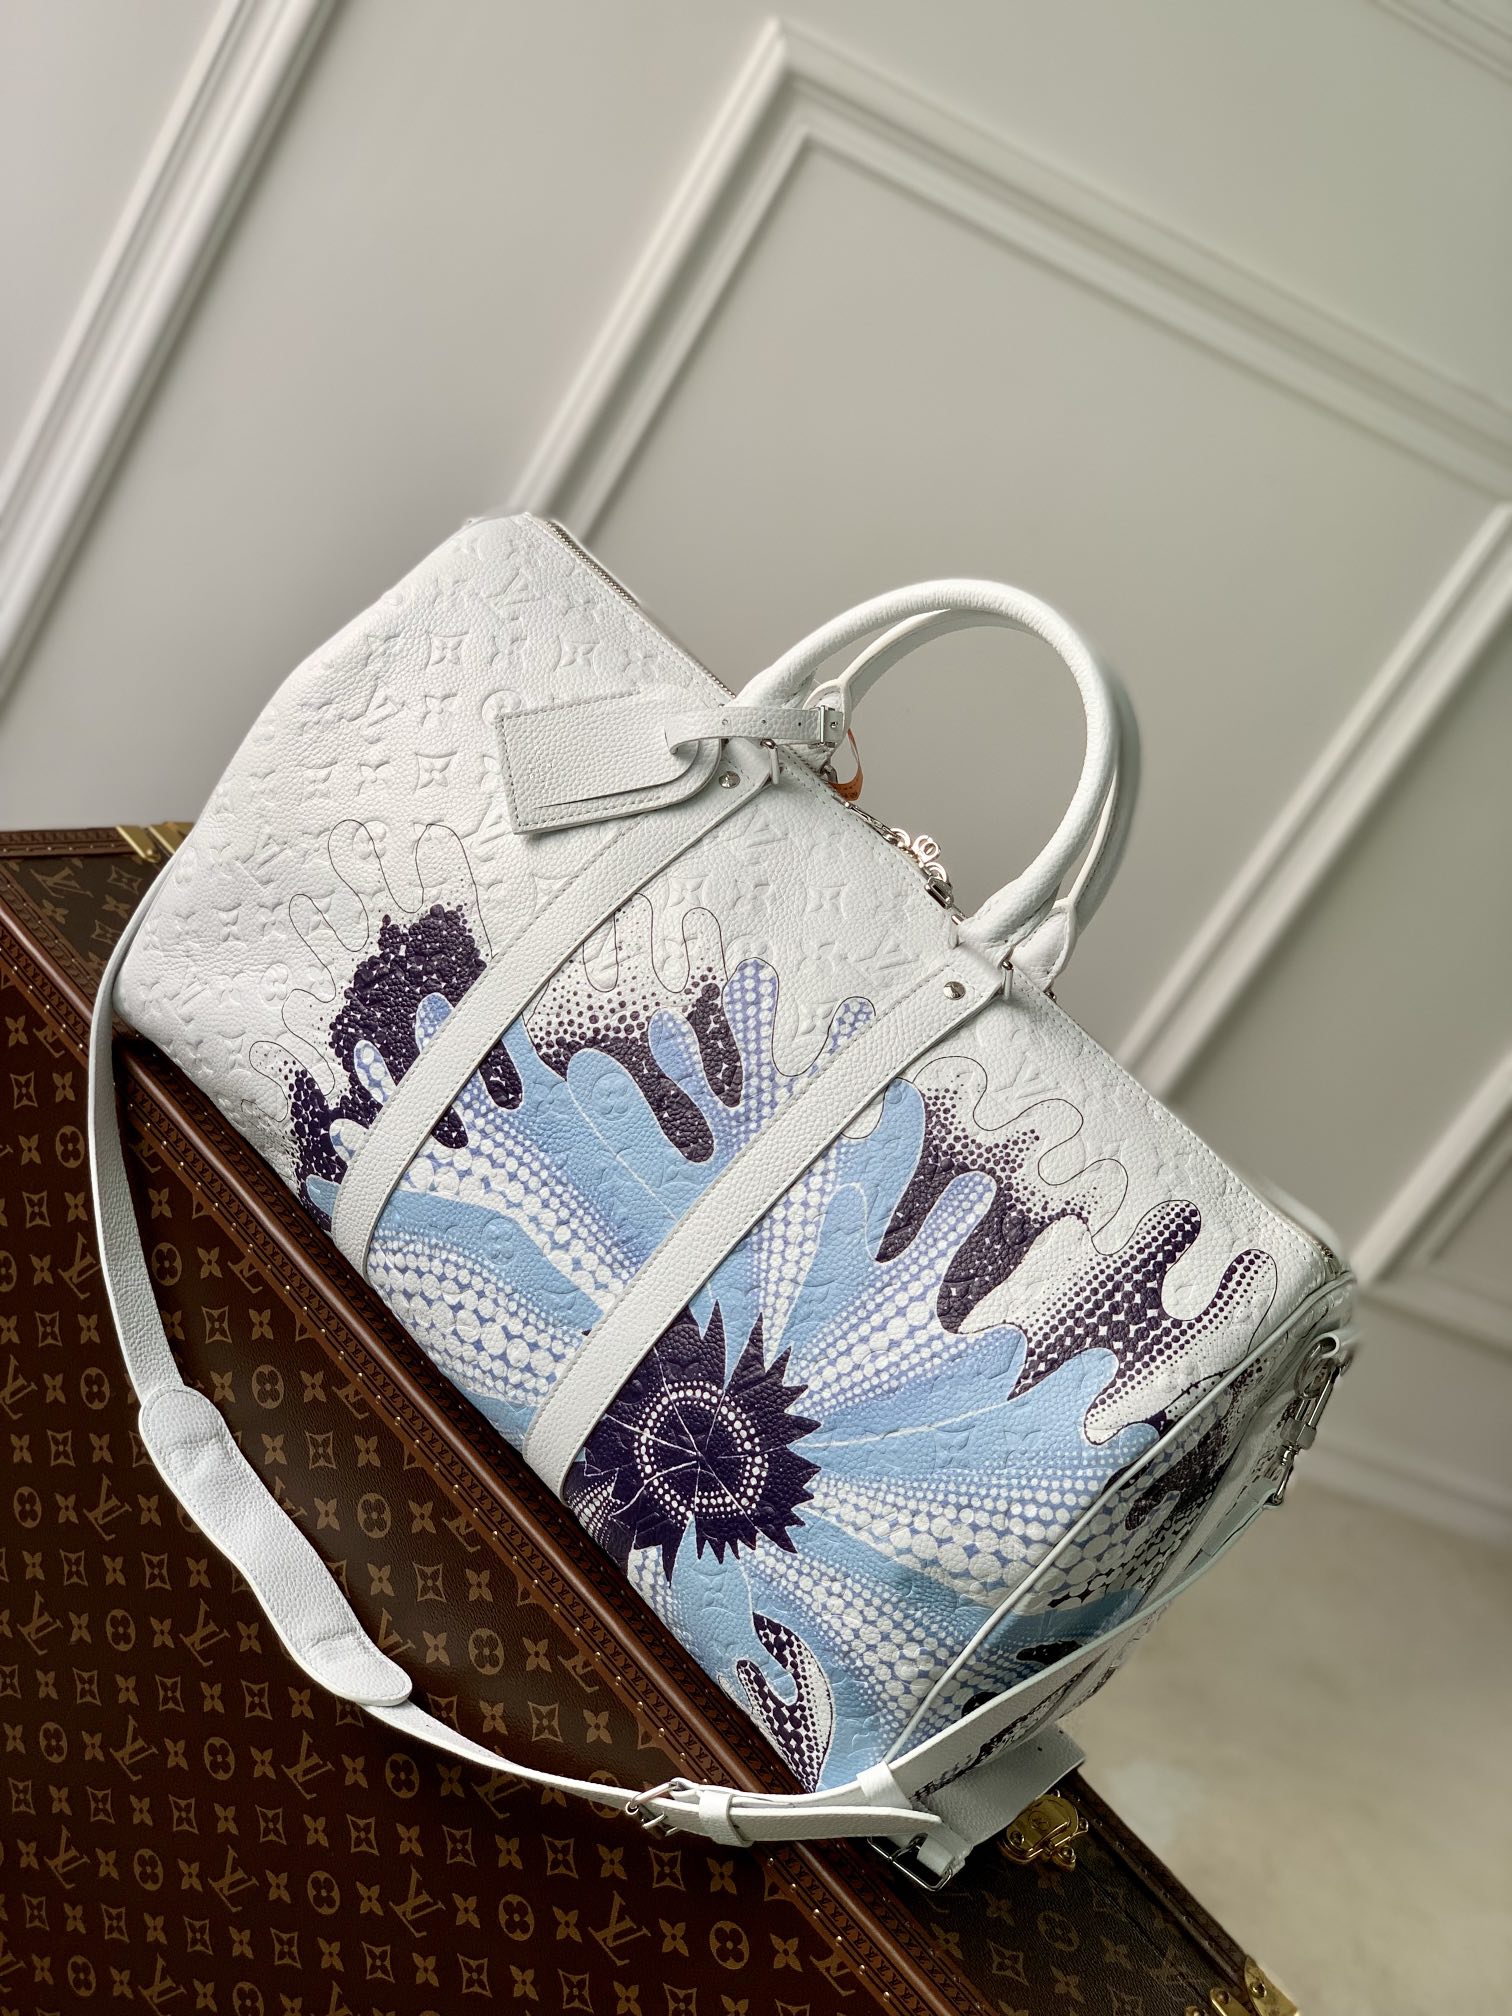 Louis Vuitton LV Keepall Travel Bags